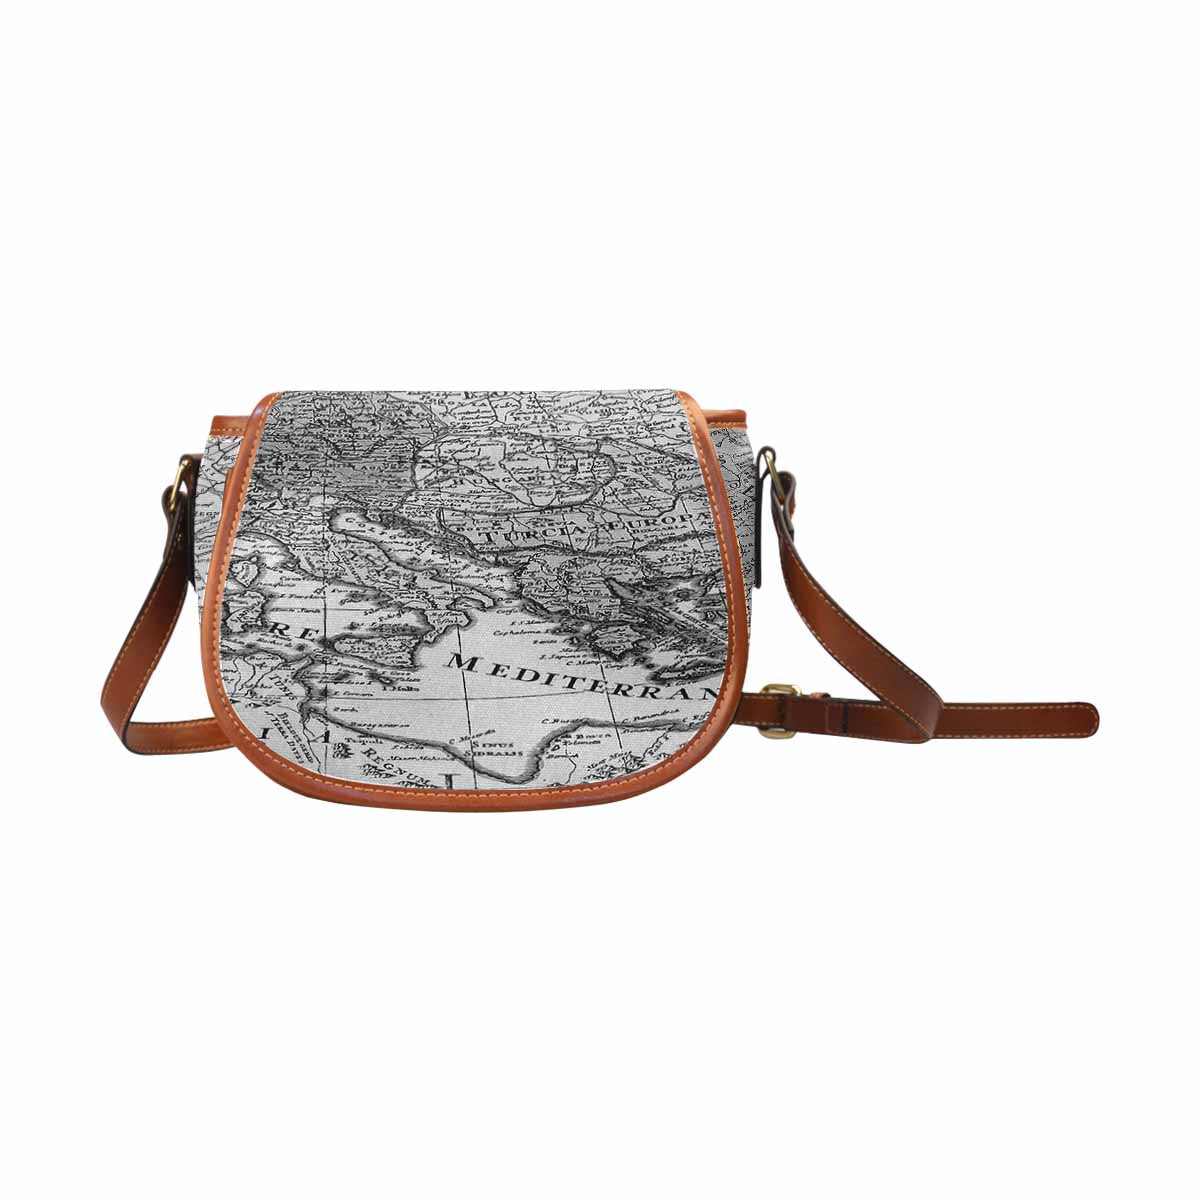 Antique Map design Handbag, saddle bag, Design 41